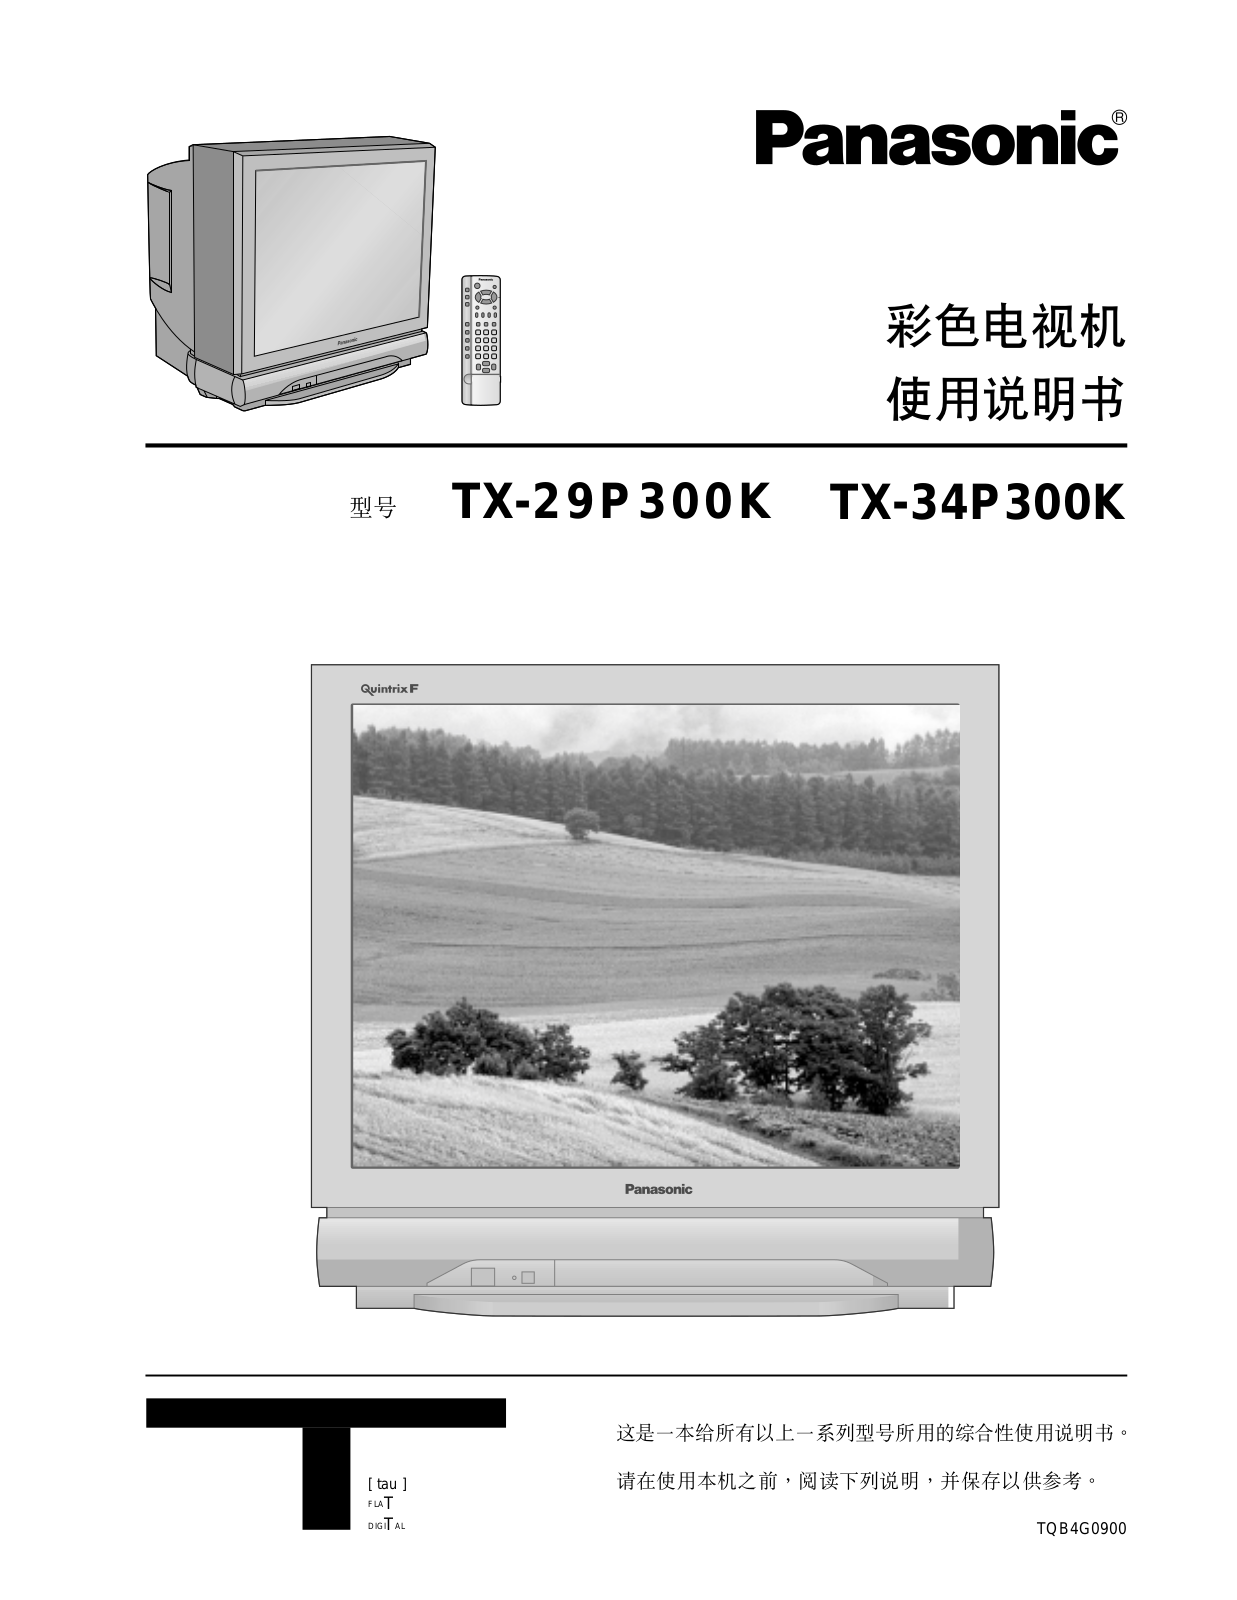 PANASONIC TX-29P300K User Manual